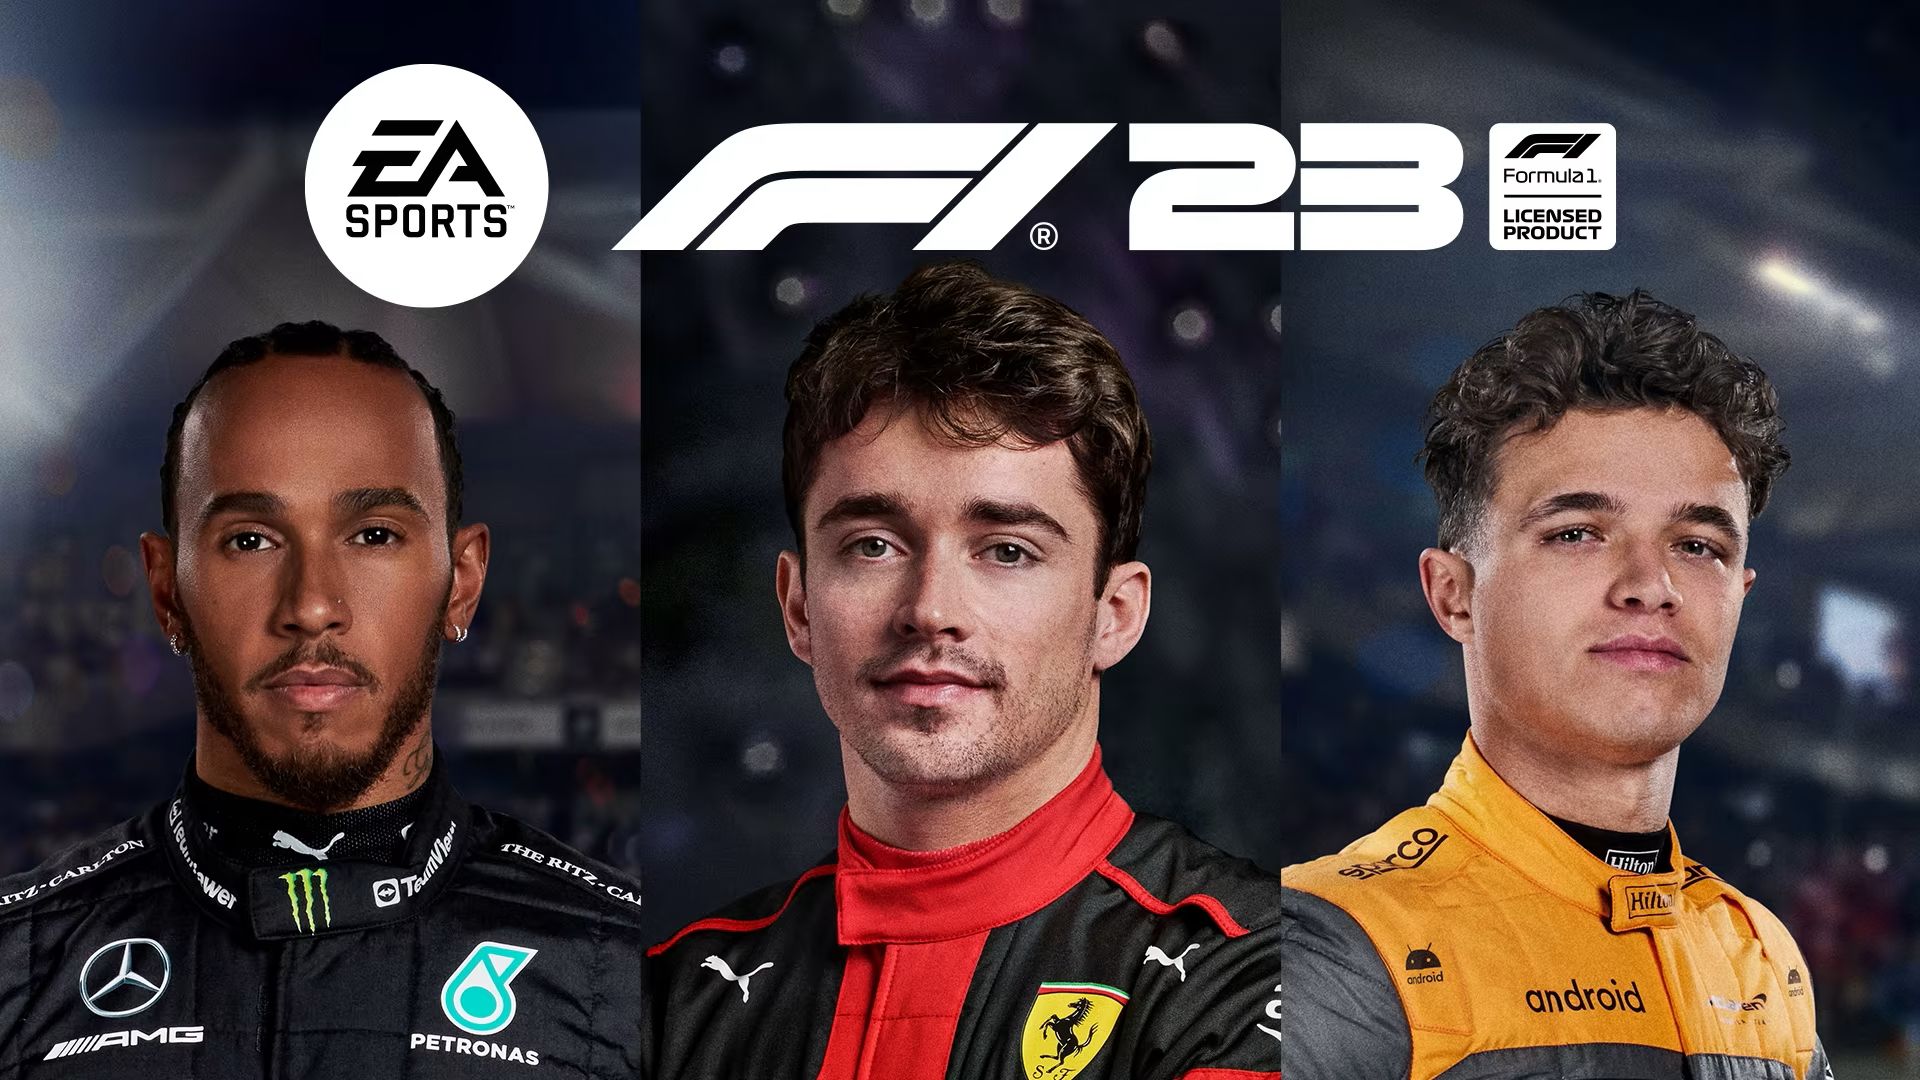 Video: F1 23 gameplay